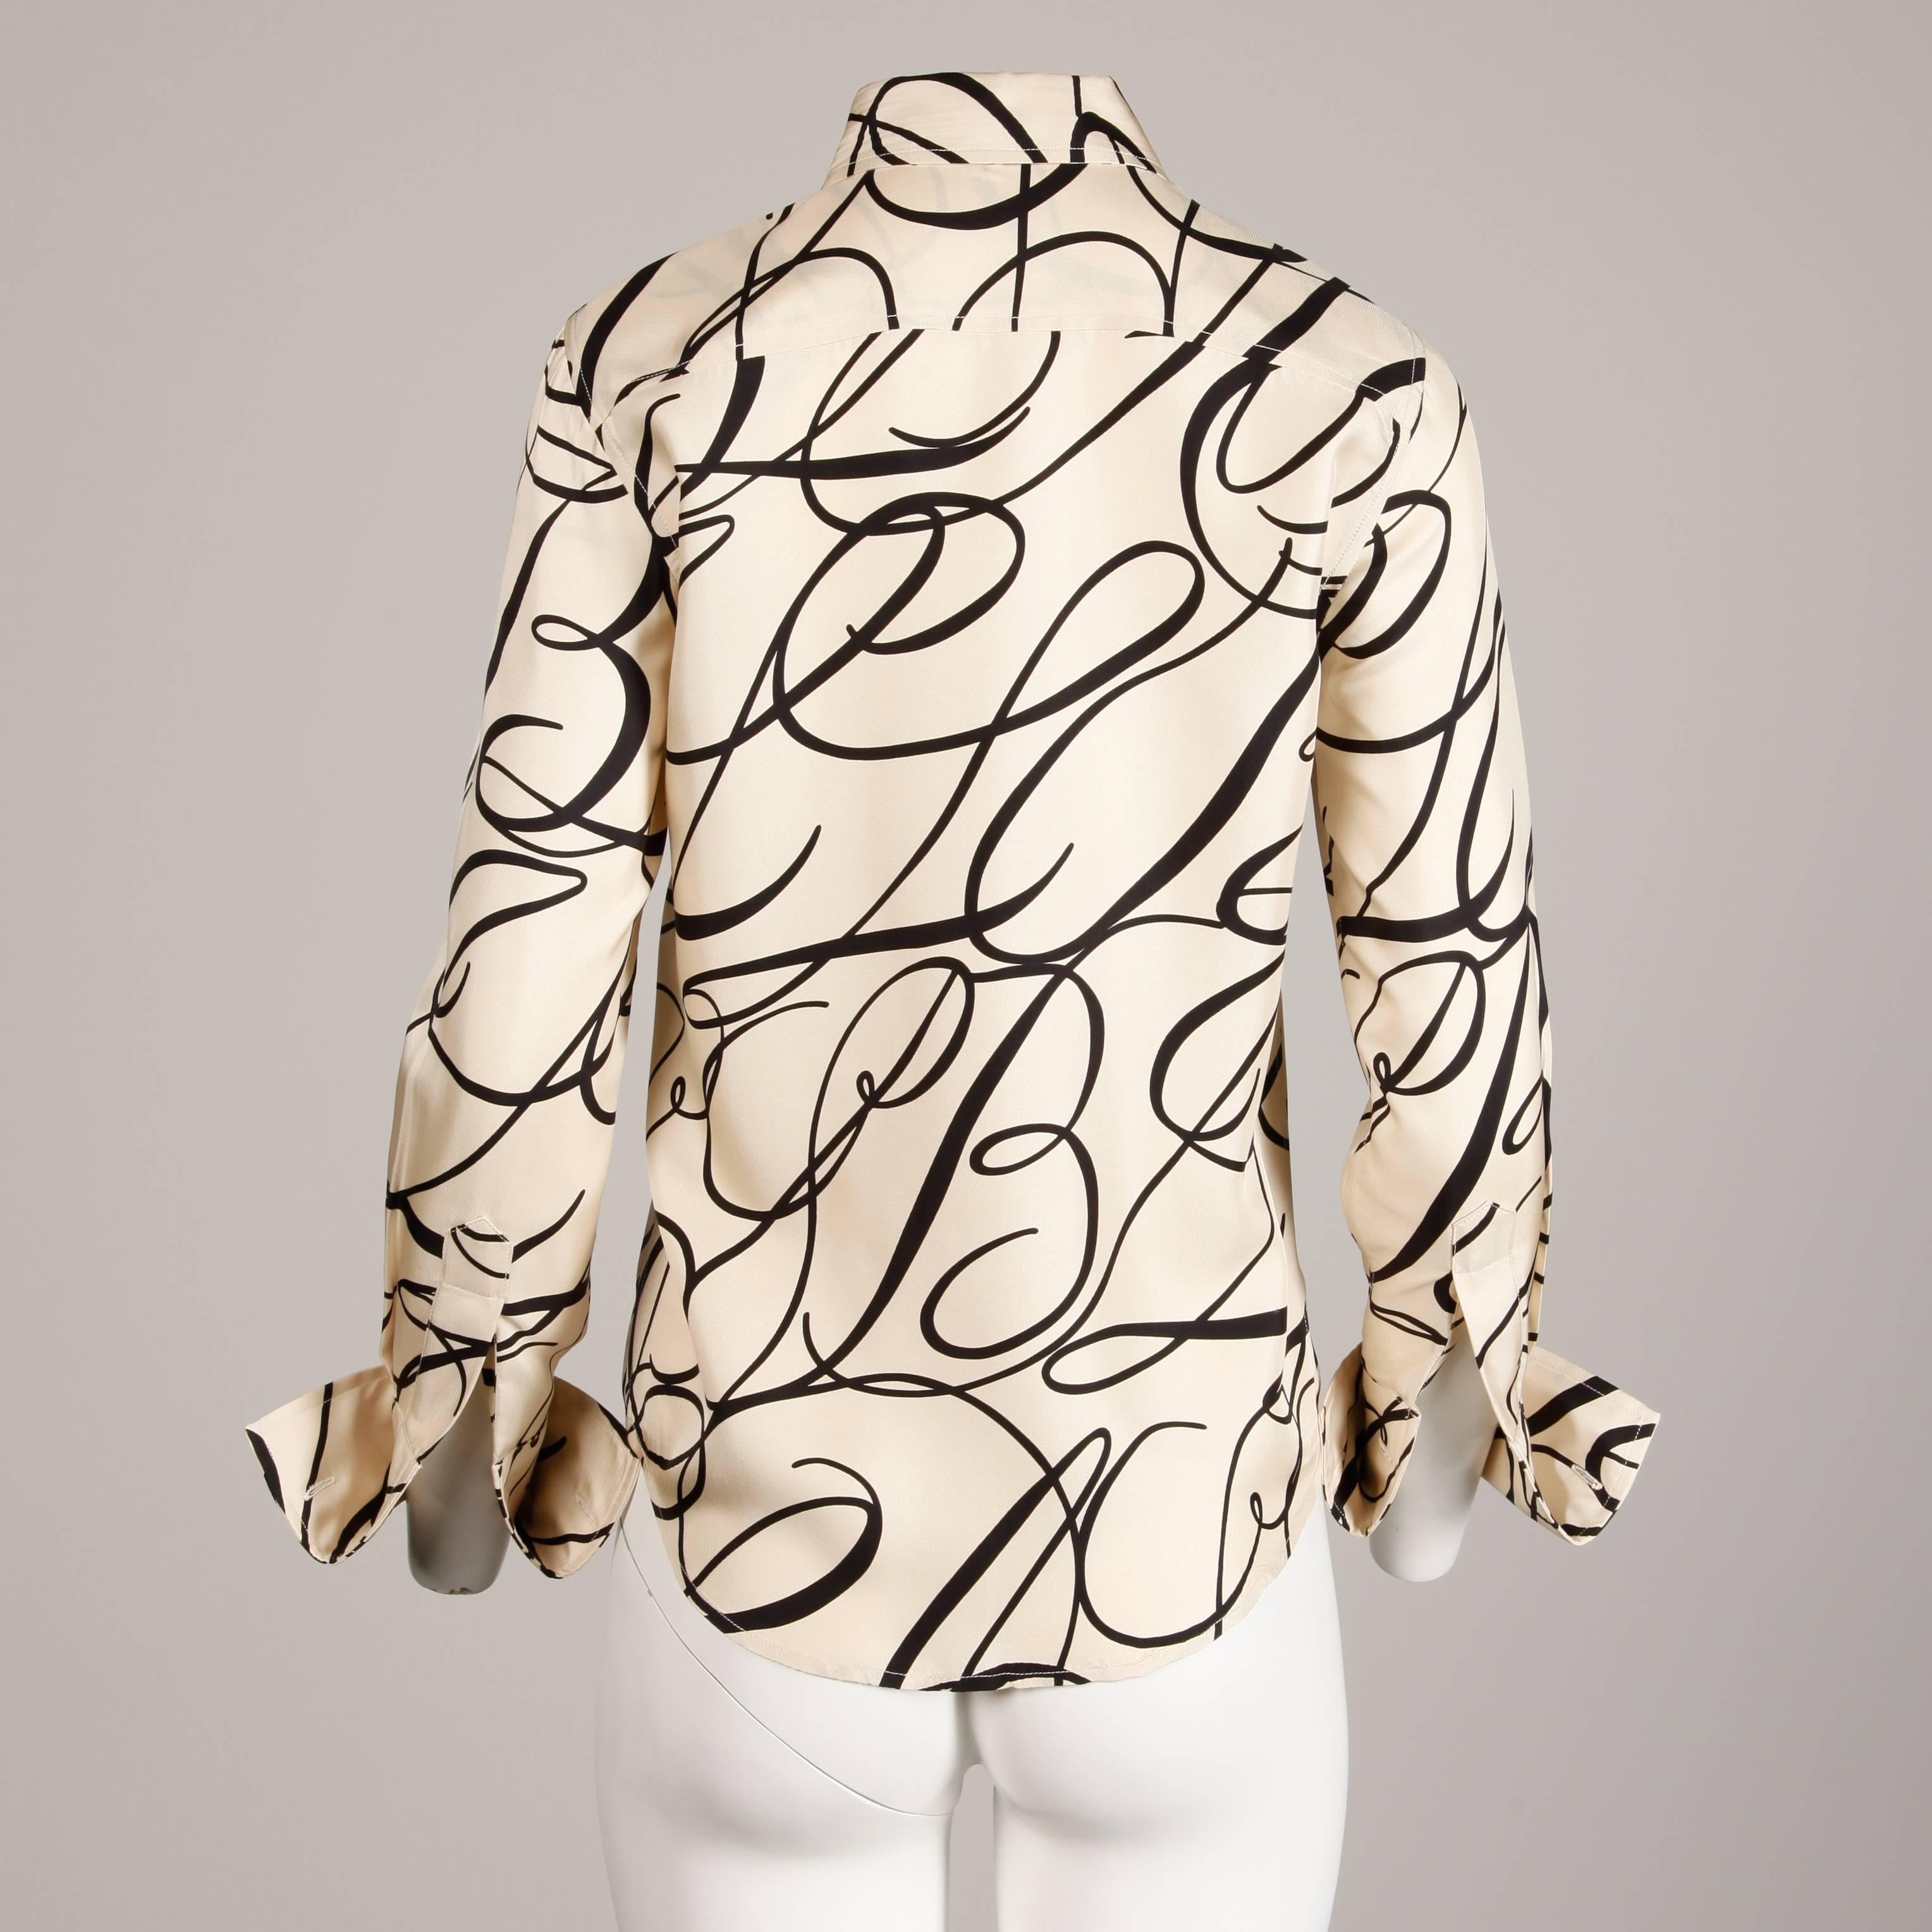 Women's Bill Blass Attributed Vintage Silk Scroll Print Blouse or Button Up Top / Shirt